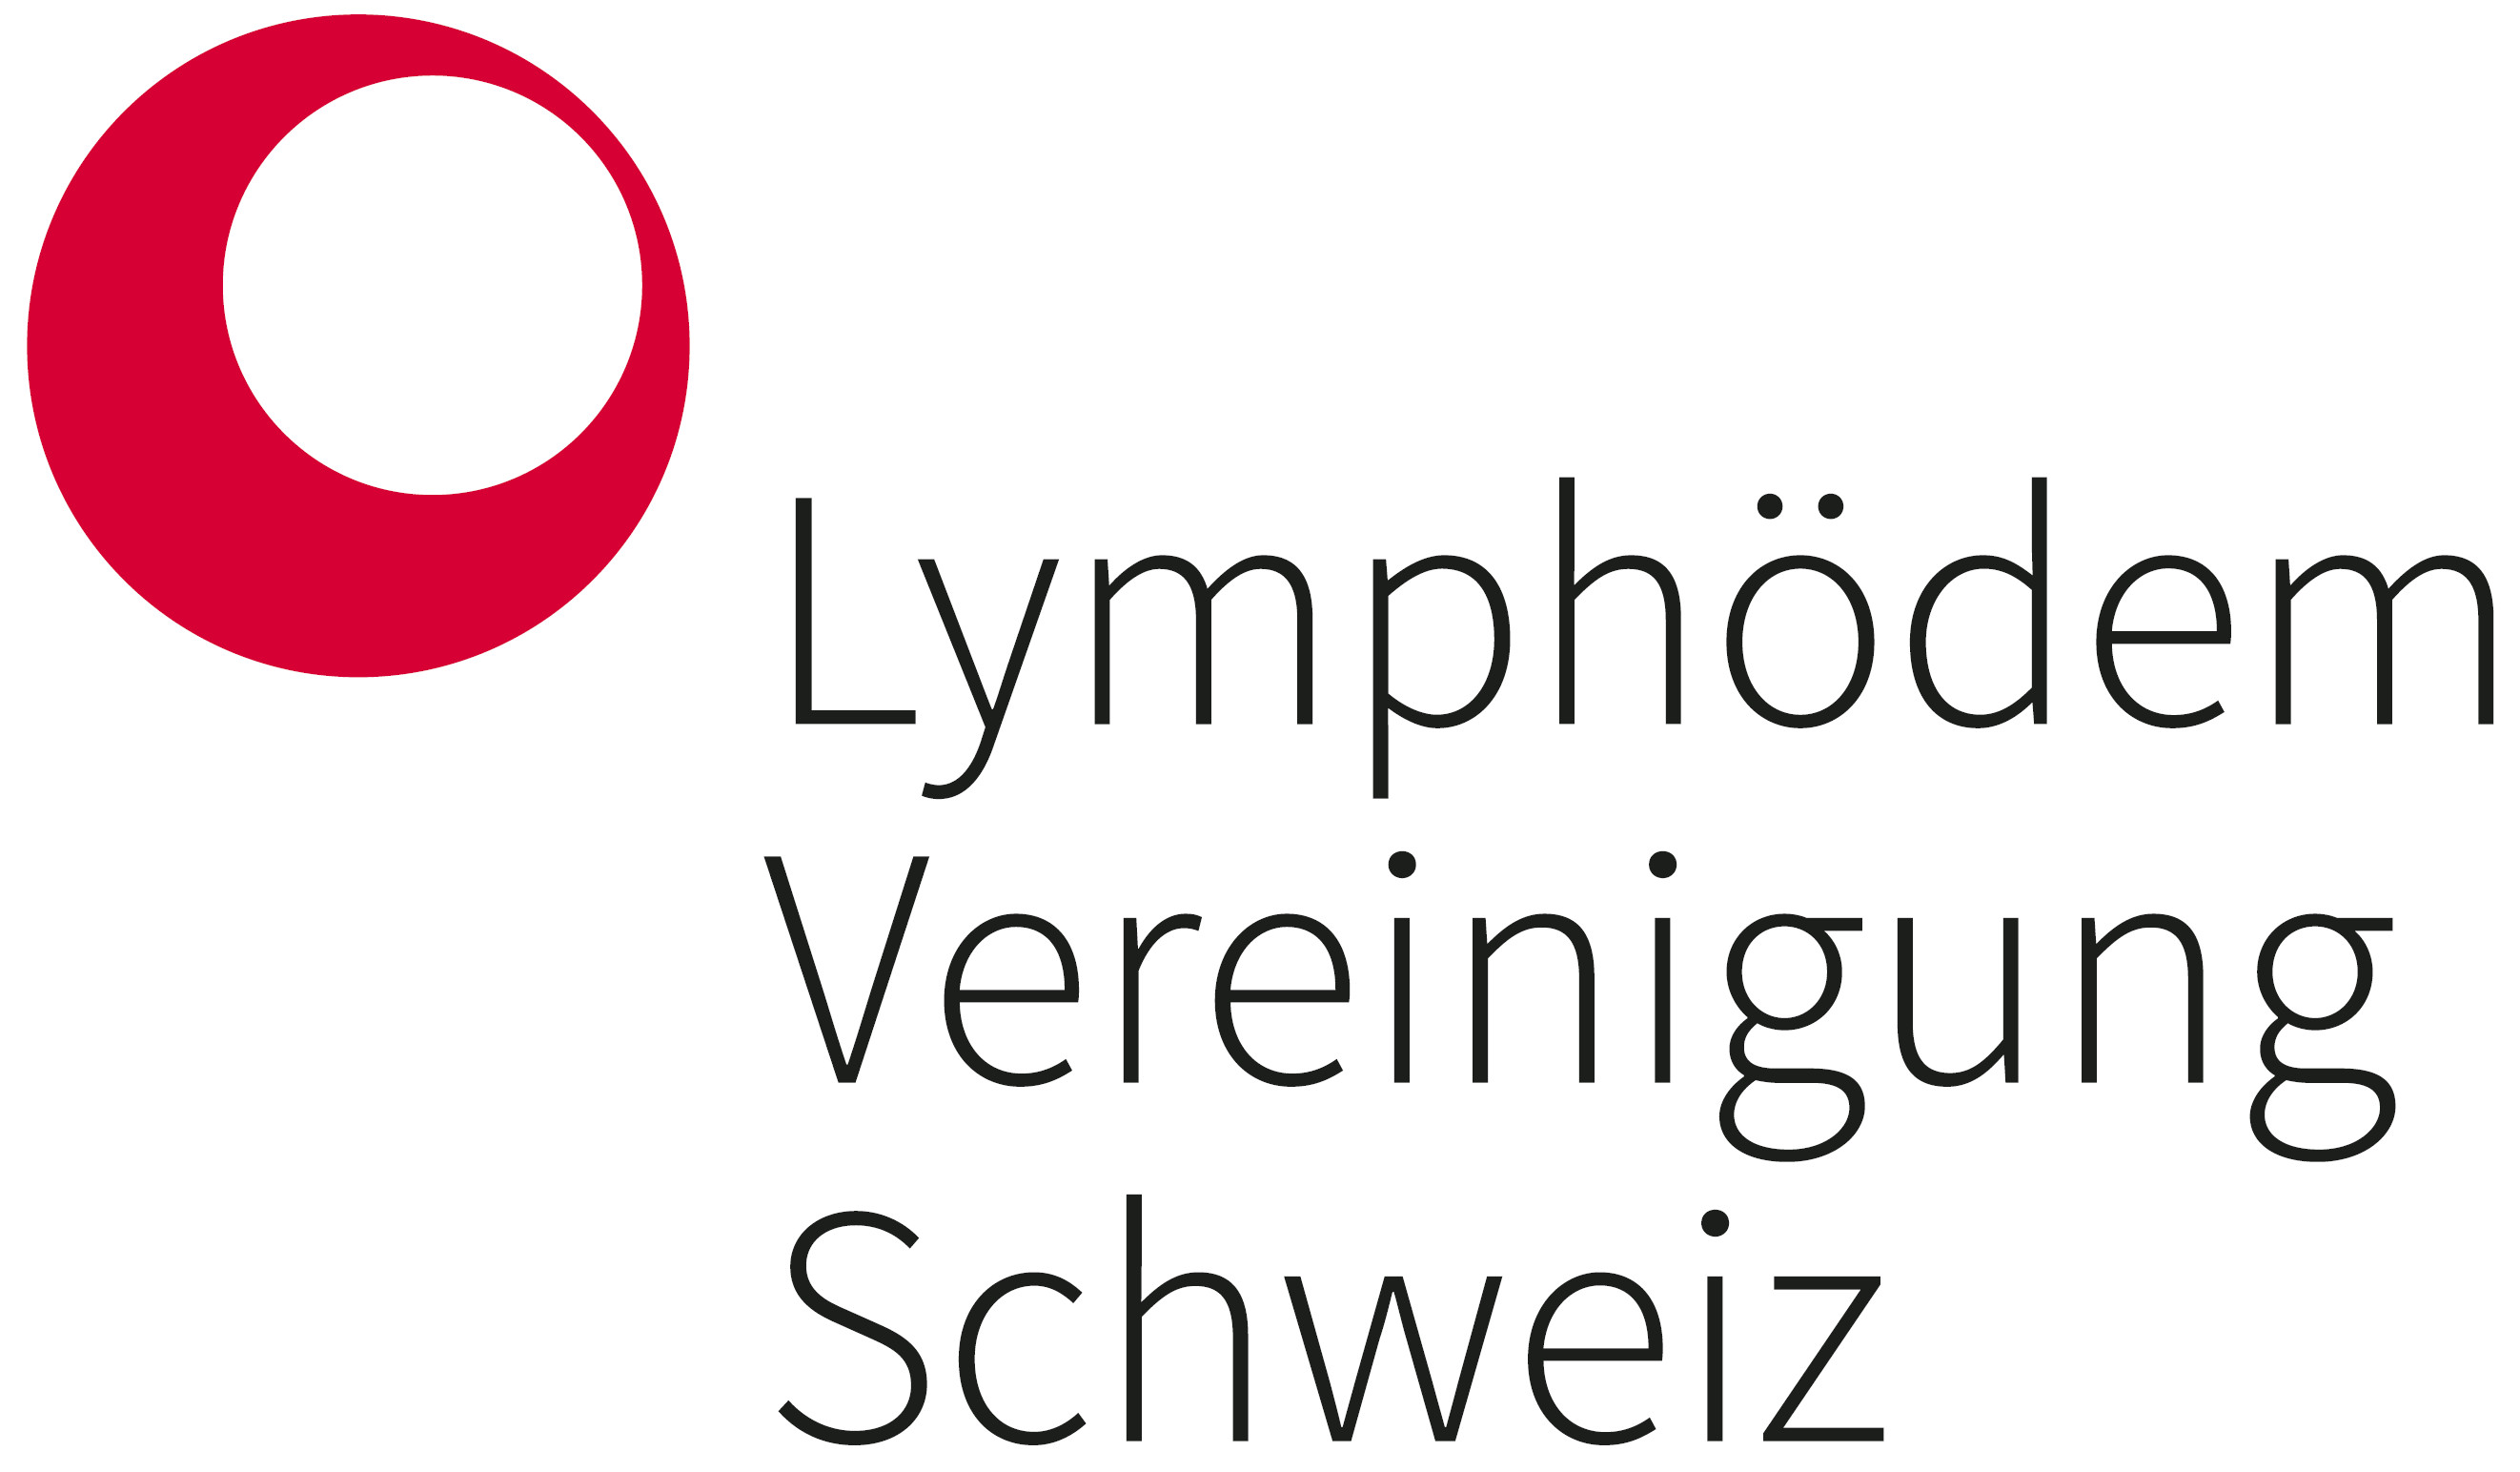 Lymphtherapie, Adressen Manuelle Lymphtrainage bei Lymphödeme Schweiz